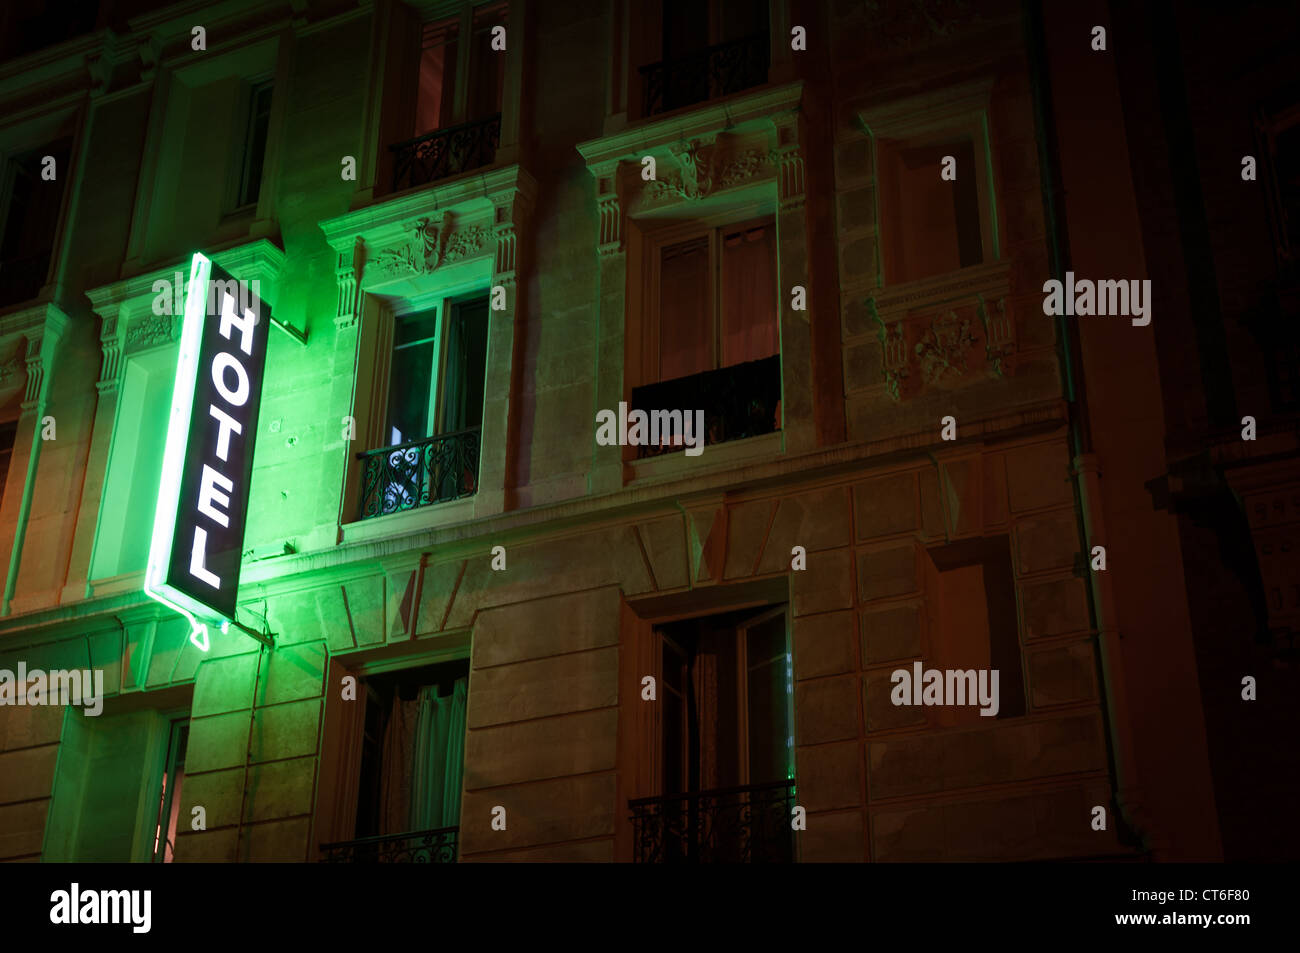 Illuminated green hotel sign on building. Paris, France, Europe. Stock Photo